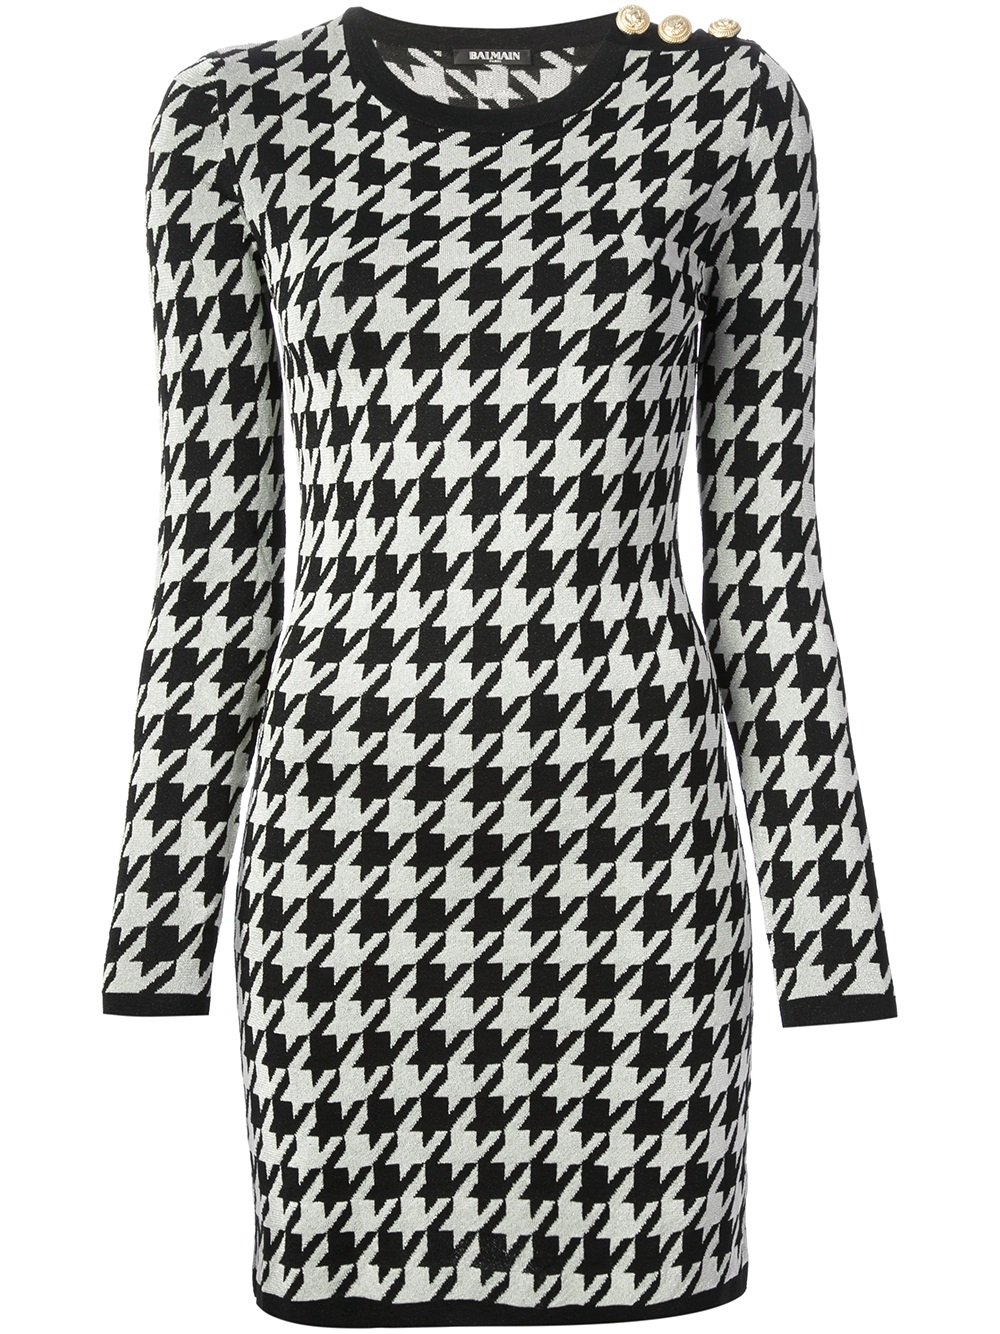 Balmain Geometric Pattern  Dress  in Black White  Lyst